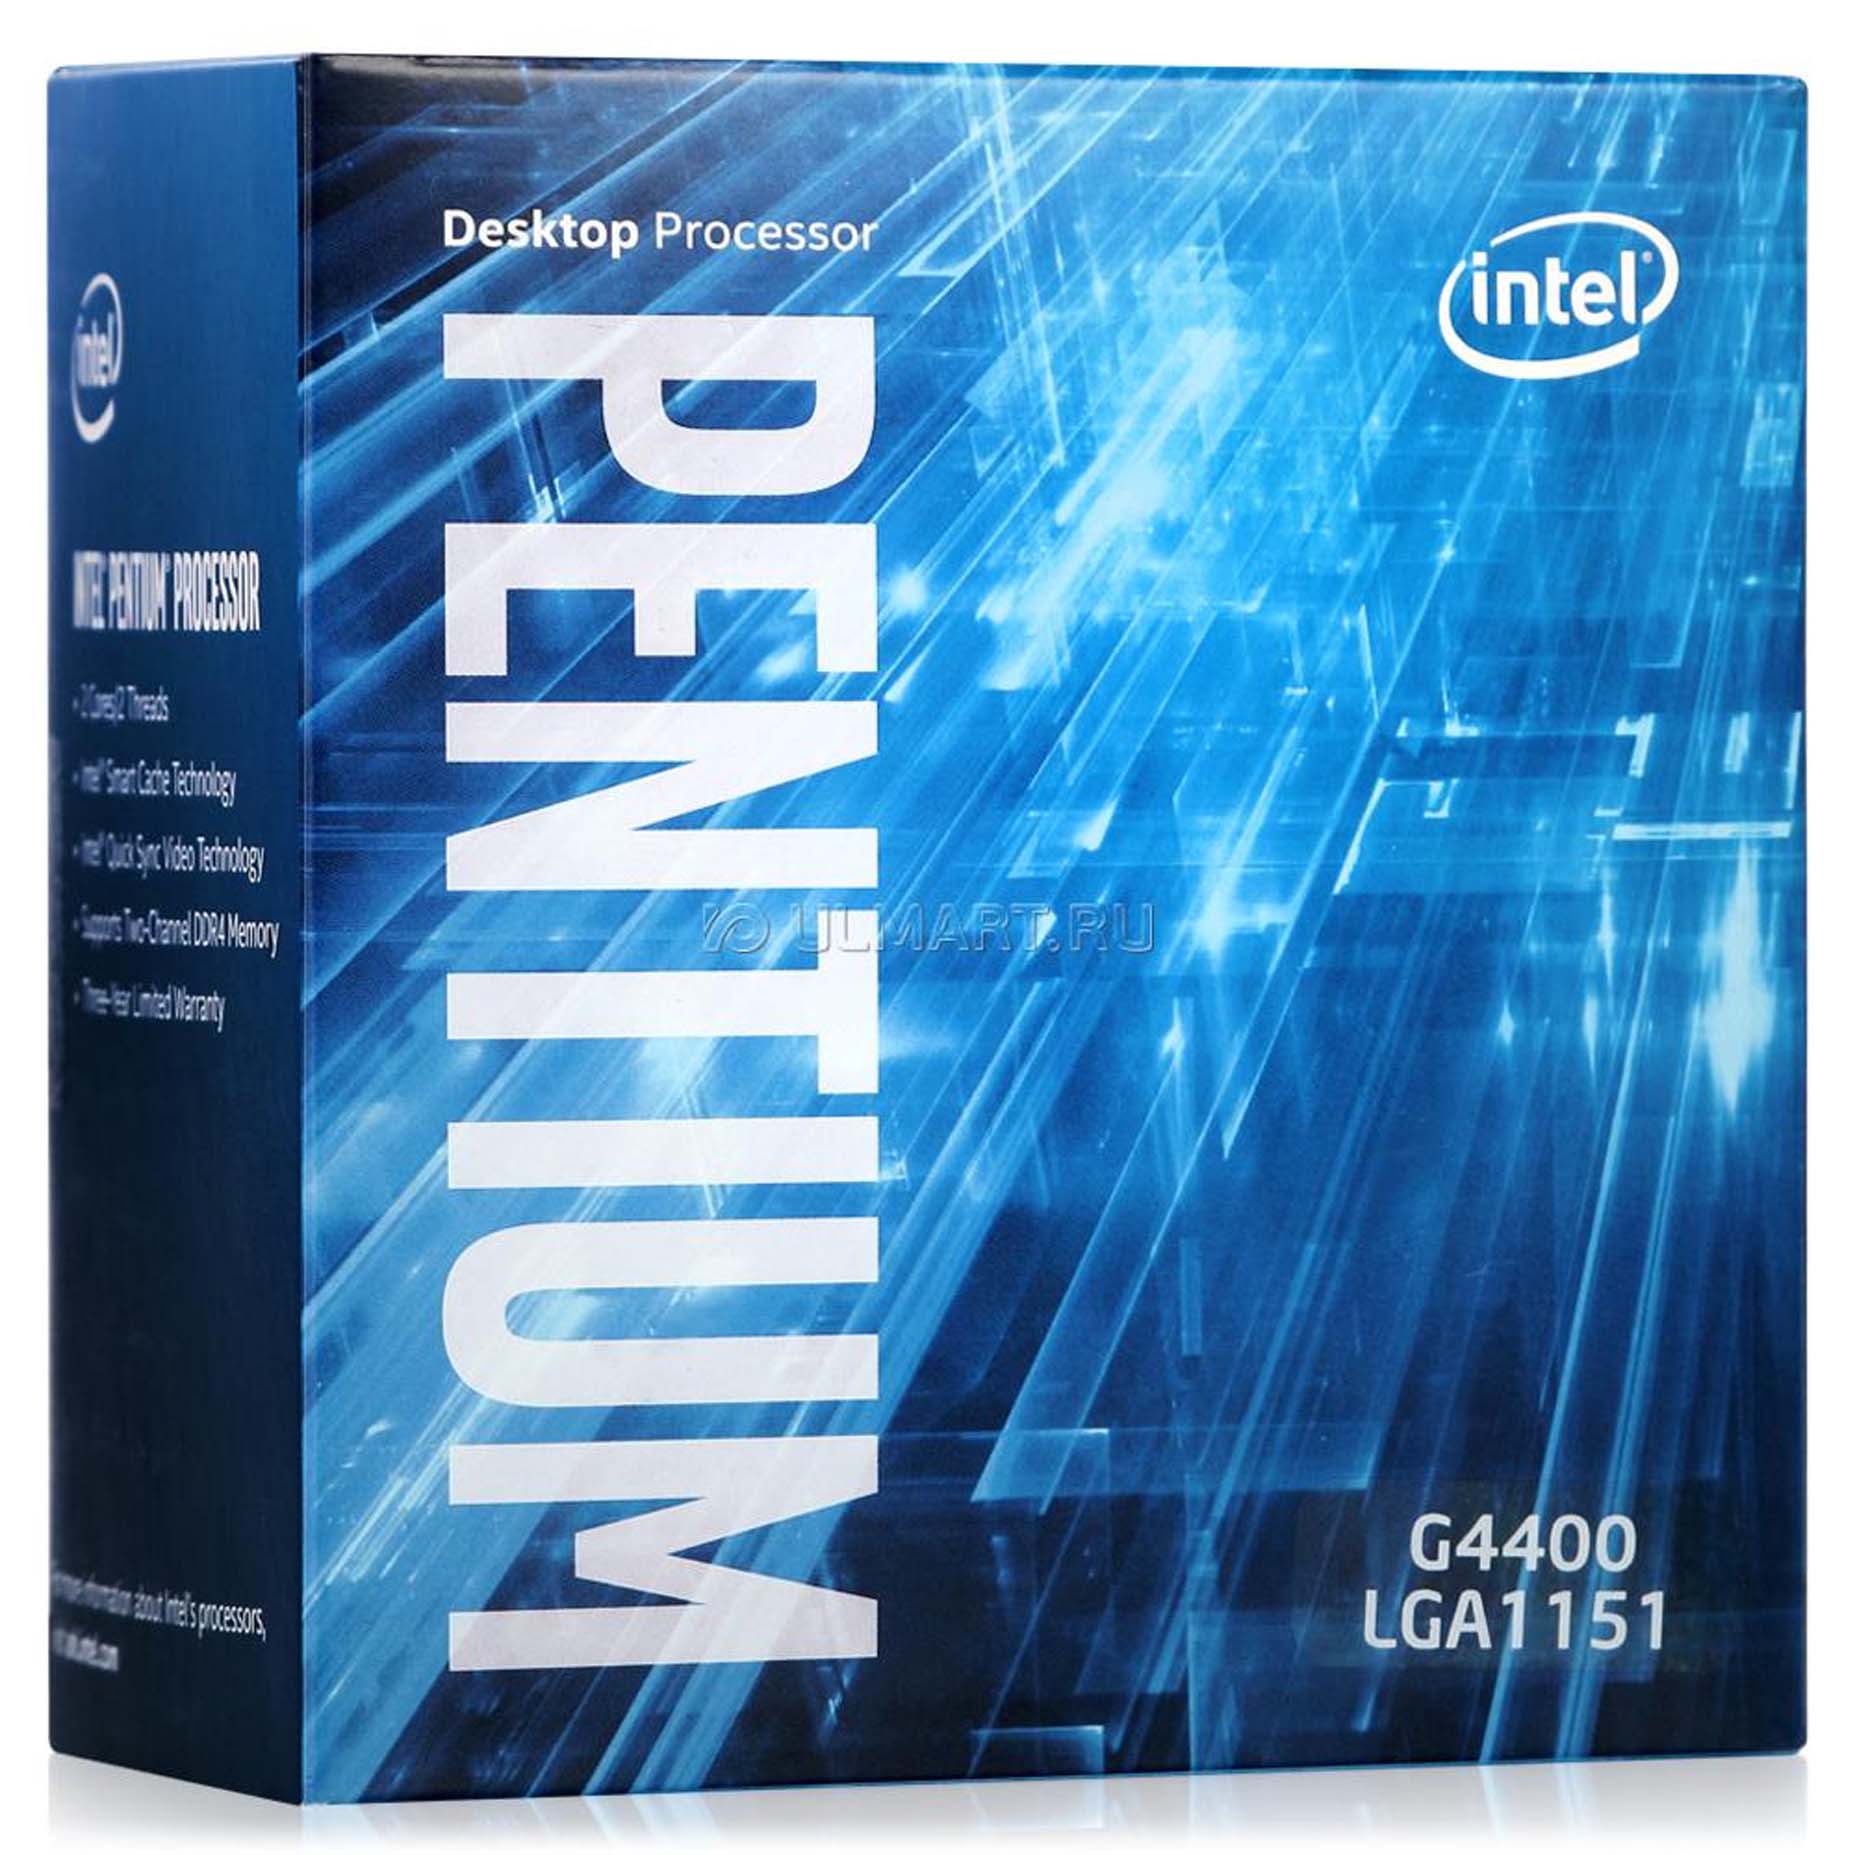 Harga Jual Processor Intel Pentium G4400 Cache 3M, 3,30 GHz Skylake Series LGA 1151 BOX